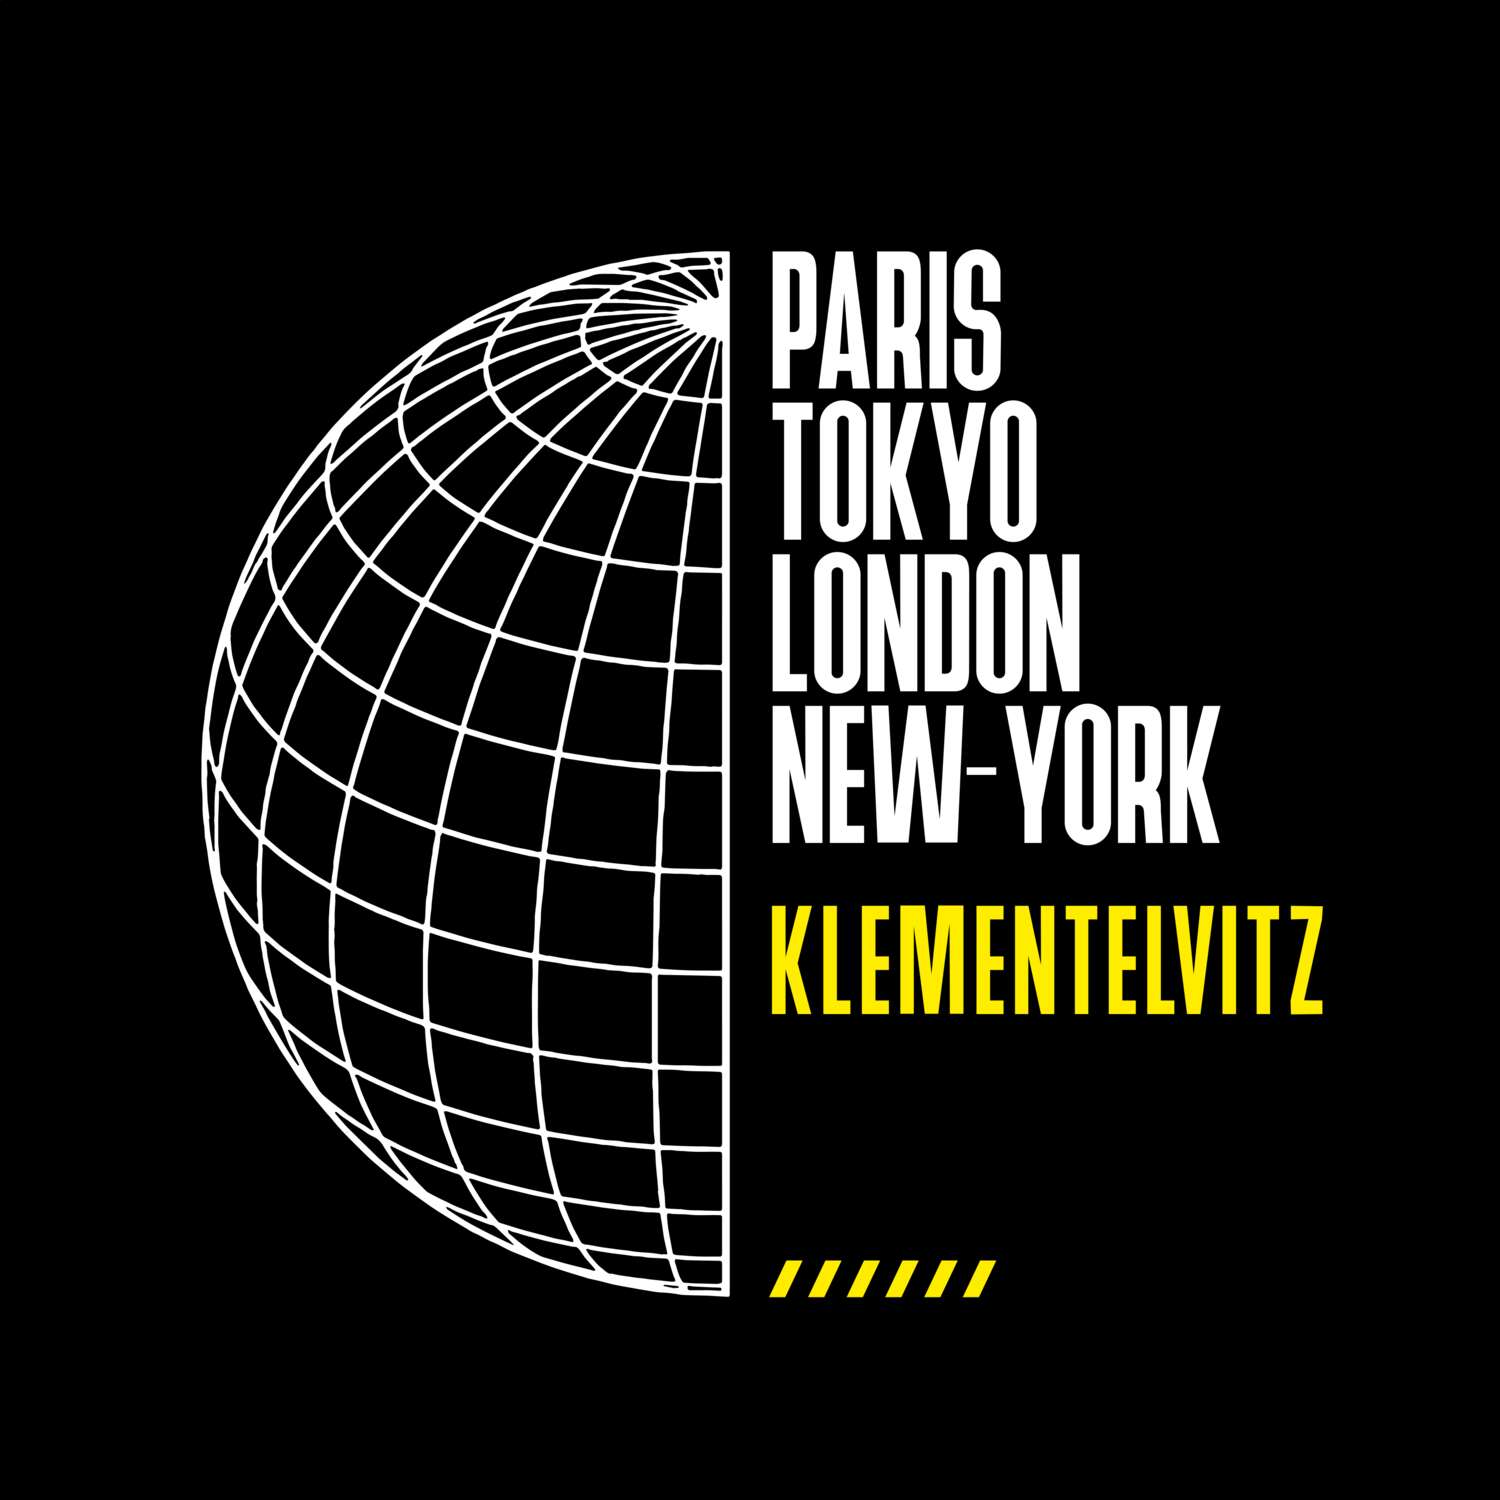 Klementelvitz T-Shirt »Paris Tokyo London«